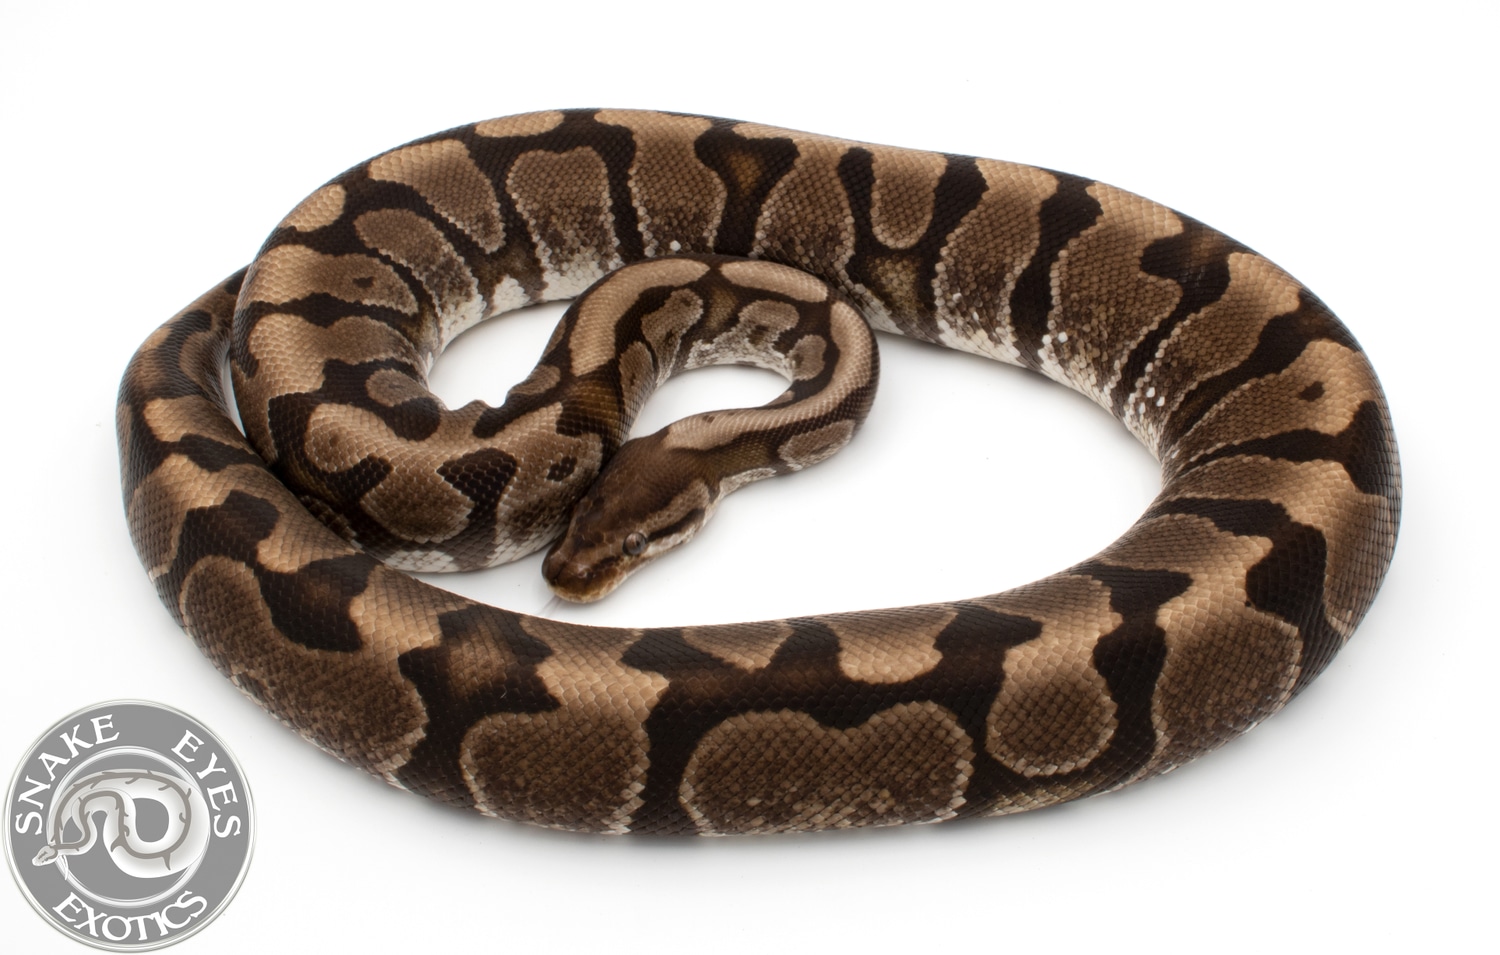 Hidden Gene Woma F Ball Python by Snake Eyes Exotics